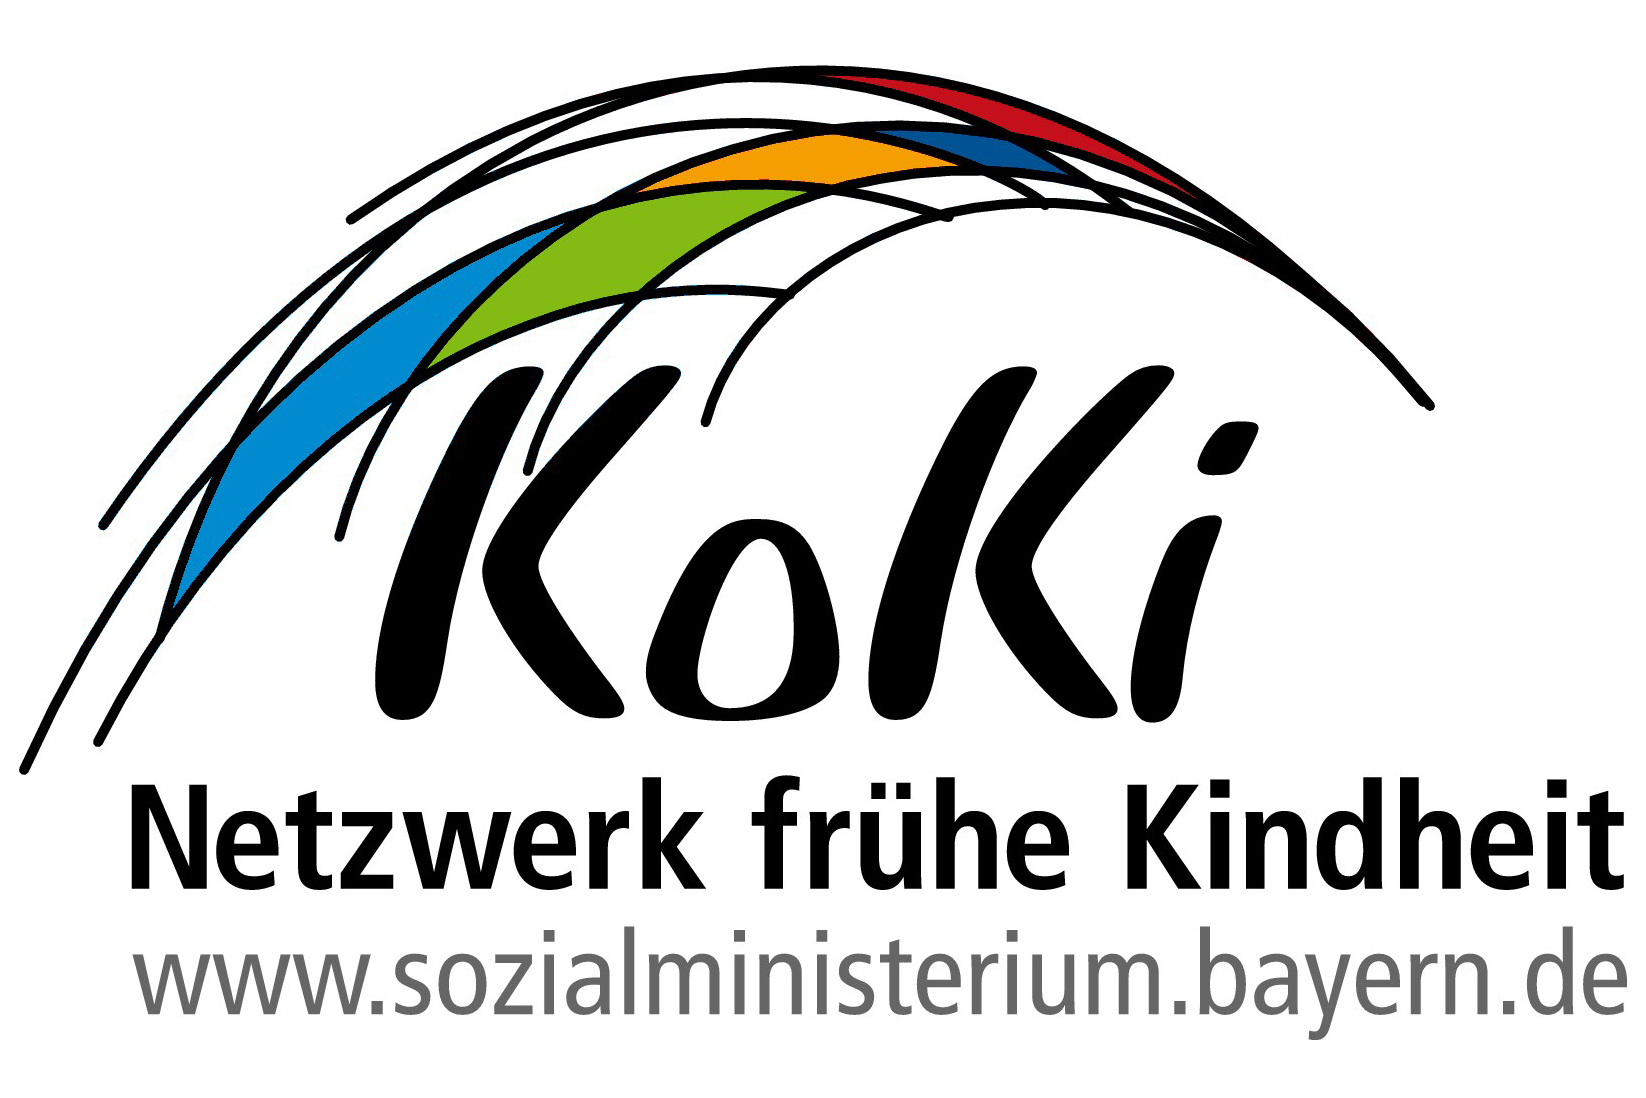 KoKi_Logo.jpg